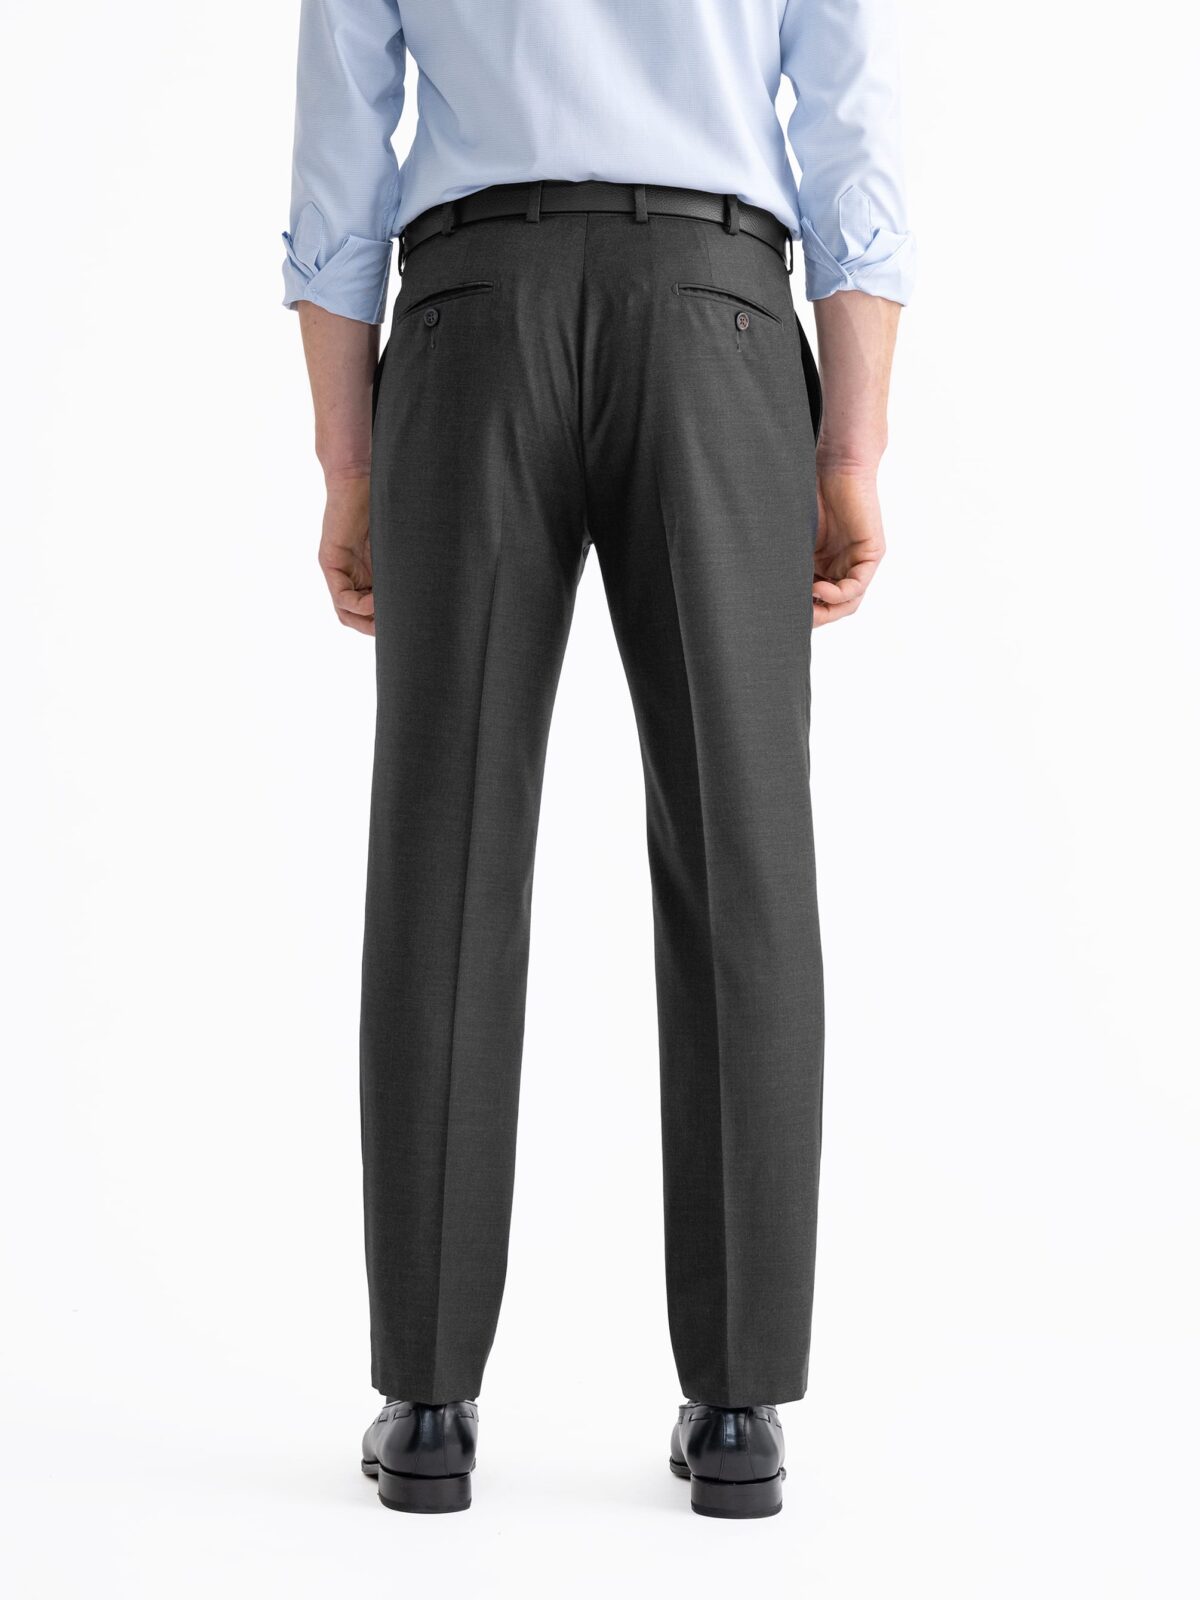 Wide cashmere pants in grey - Loro Piana